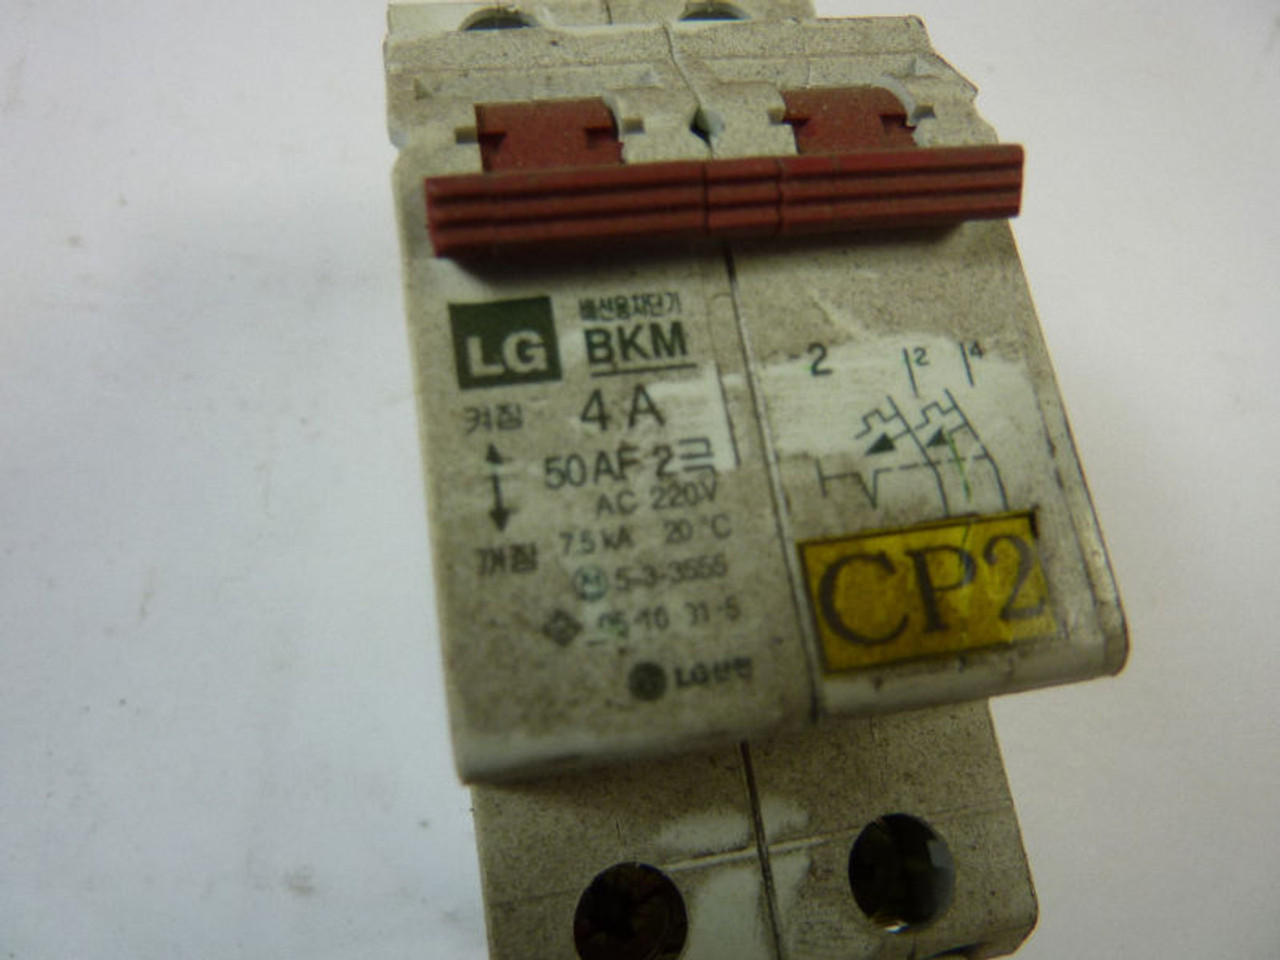 LG BKM Circuit Breaker 4 Amp 220V USED